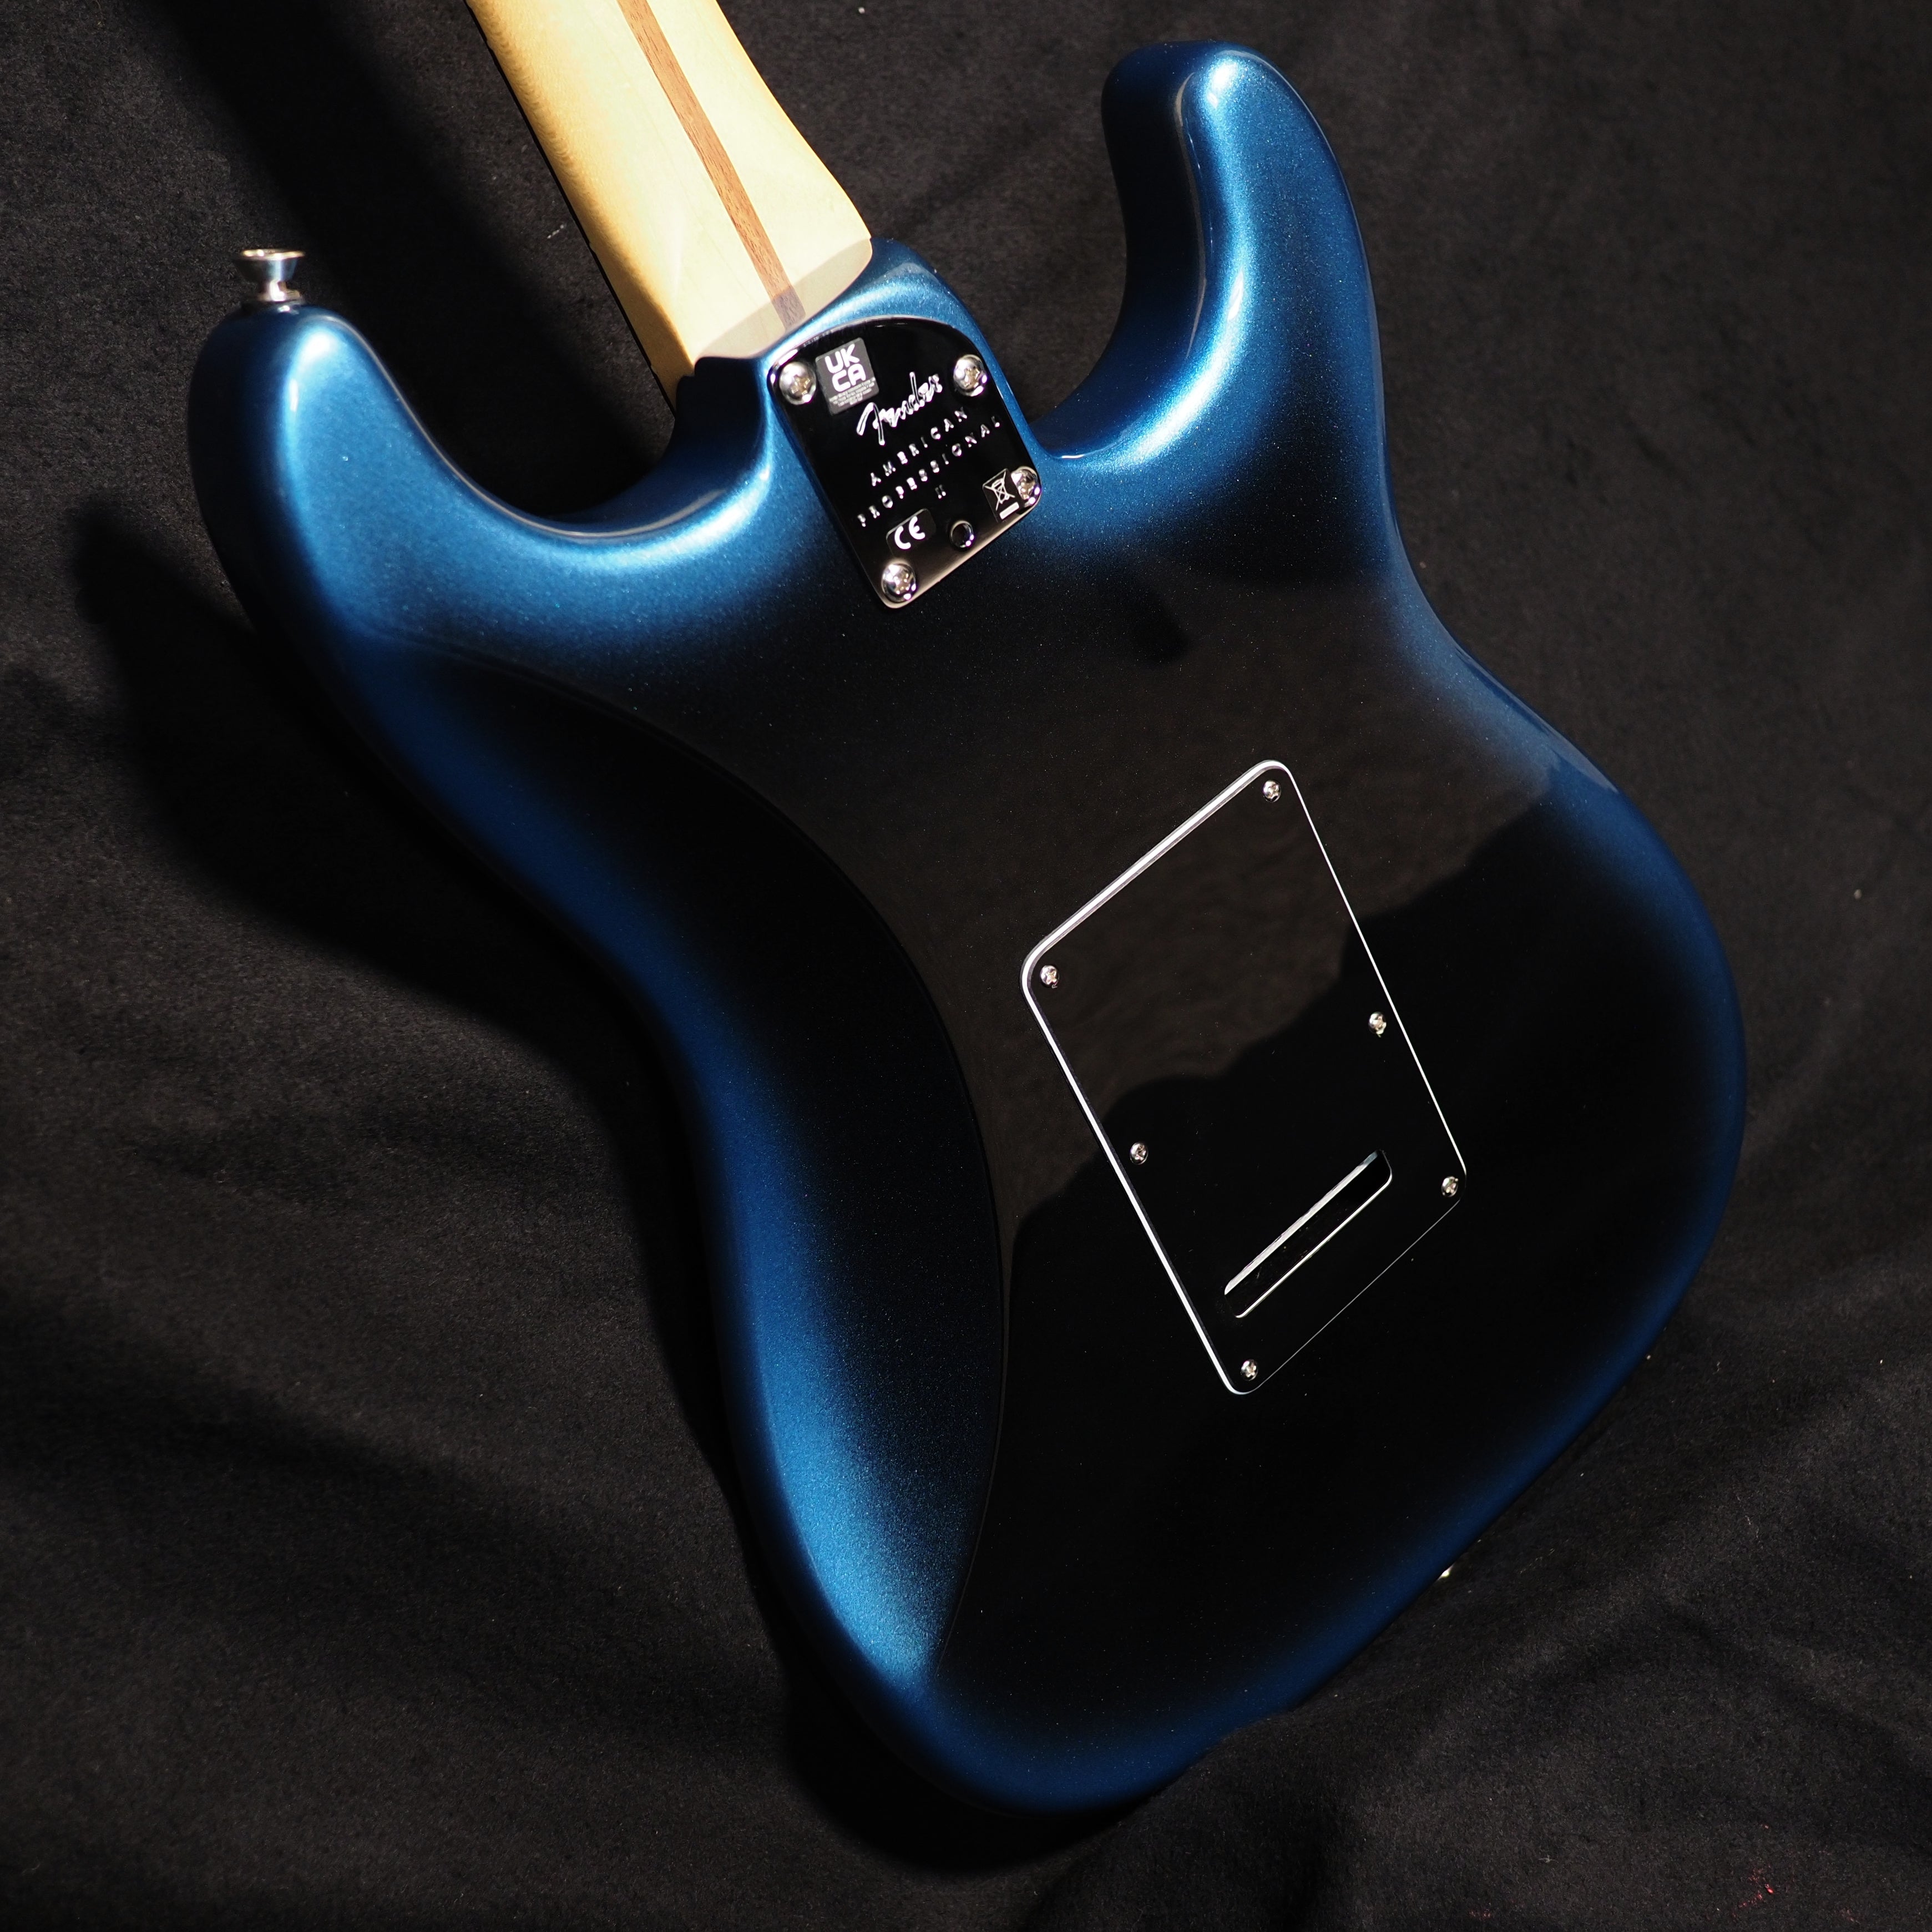 Fender American Professional II Stratocaster Left-handed - wurst.guitars